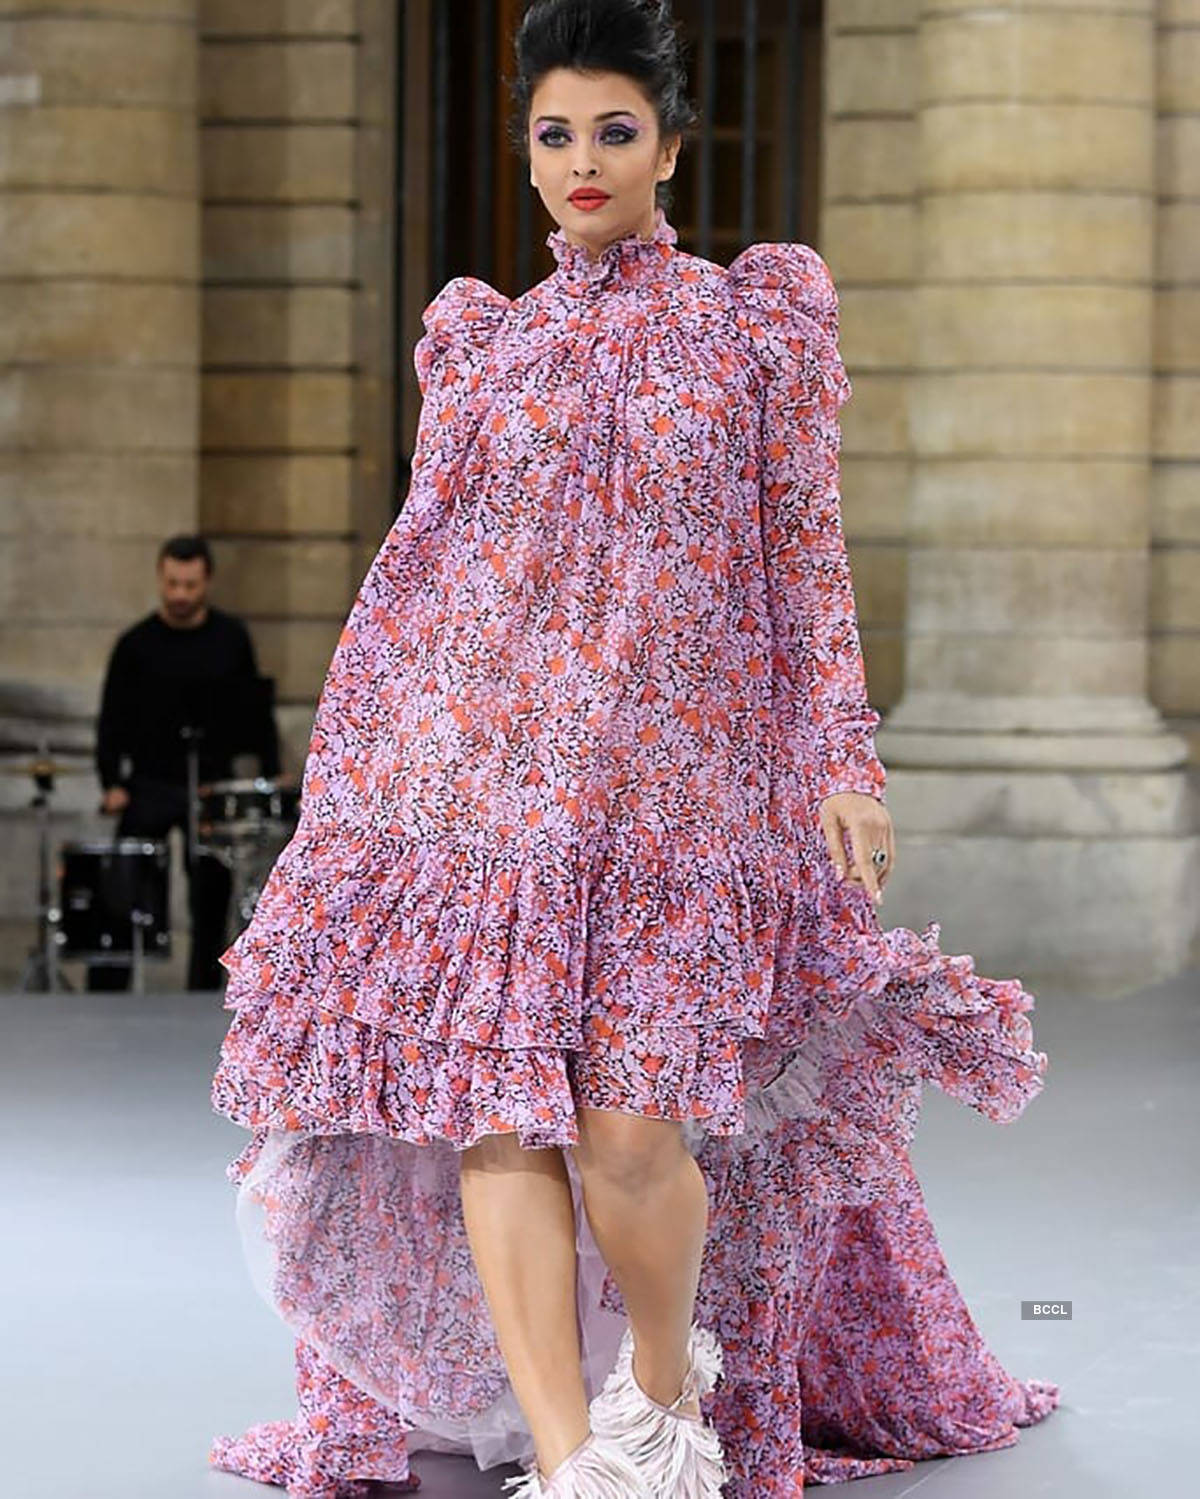 Wendell Rodricks is not happy with Aishwarya's Paris Fashion Week look